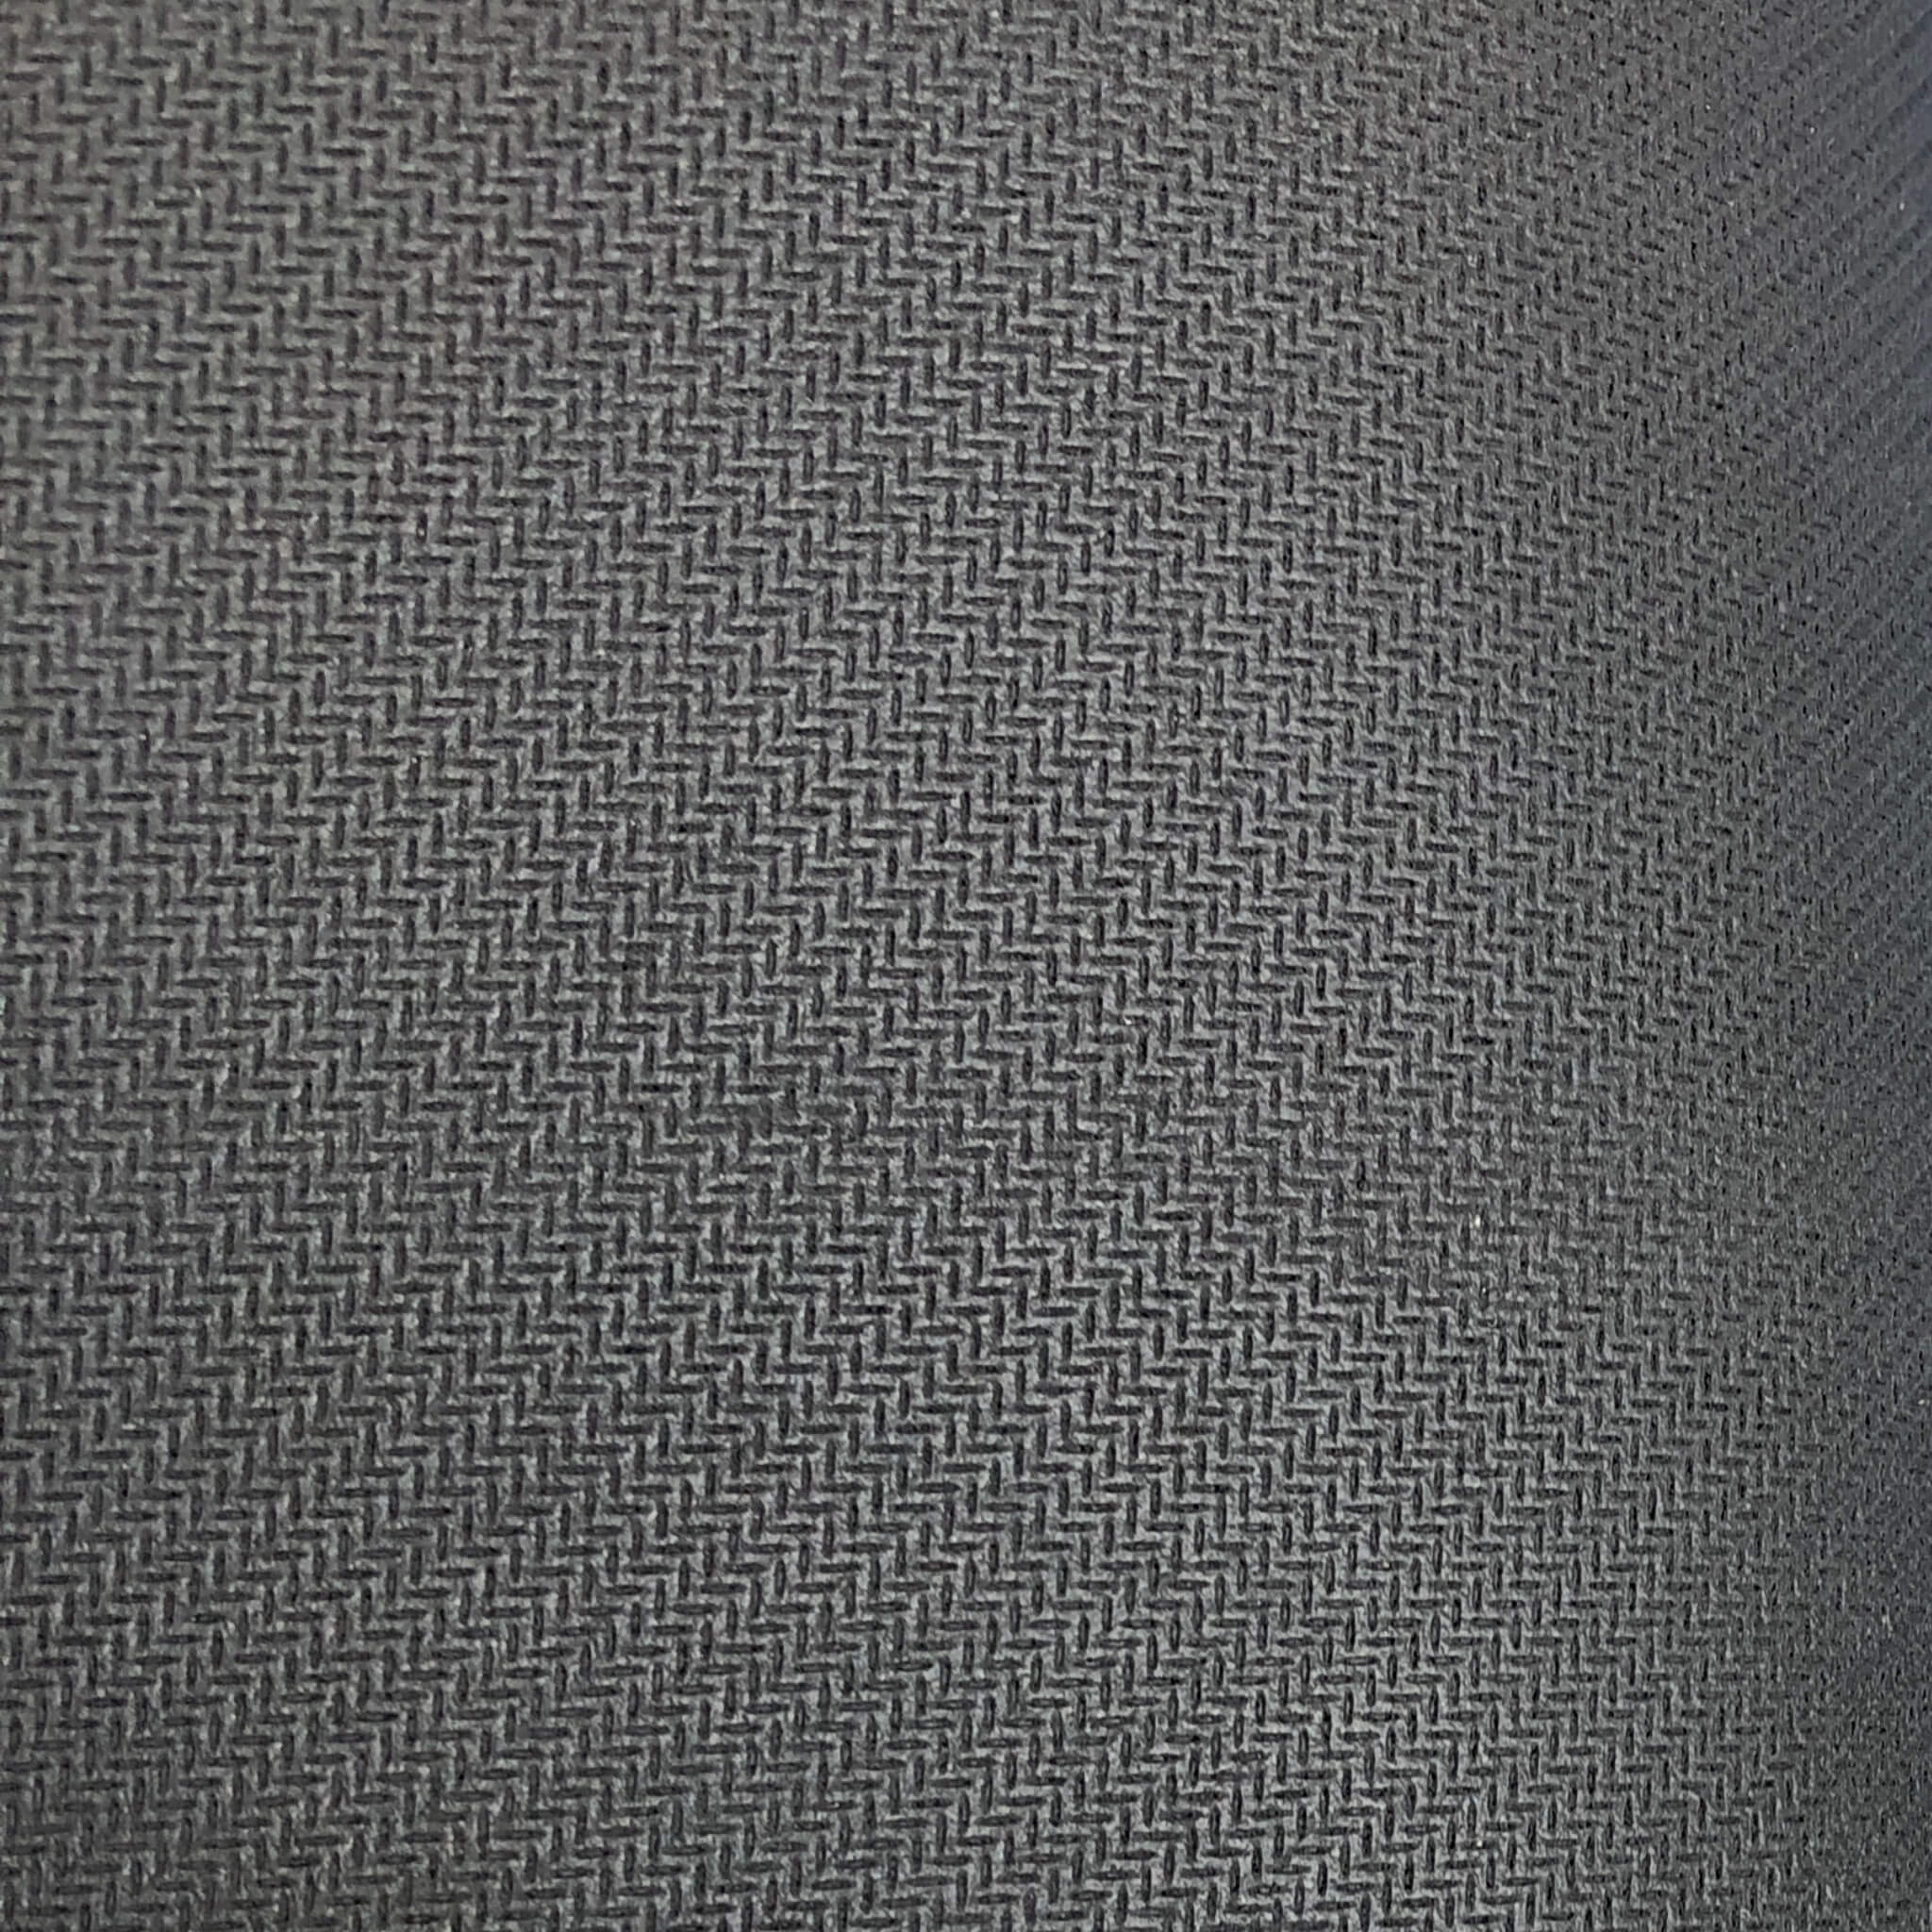 Zen AF Yoga Mat, 6mm Non-Slip Rubber Yoga Mat